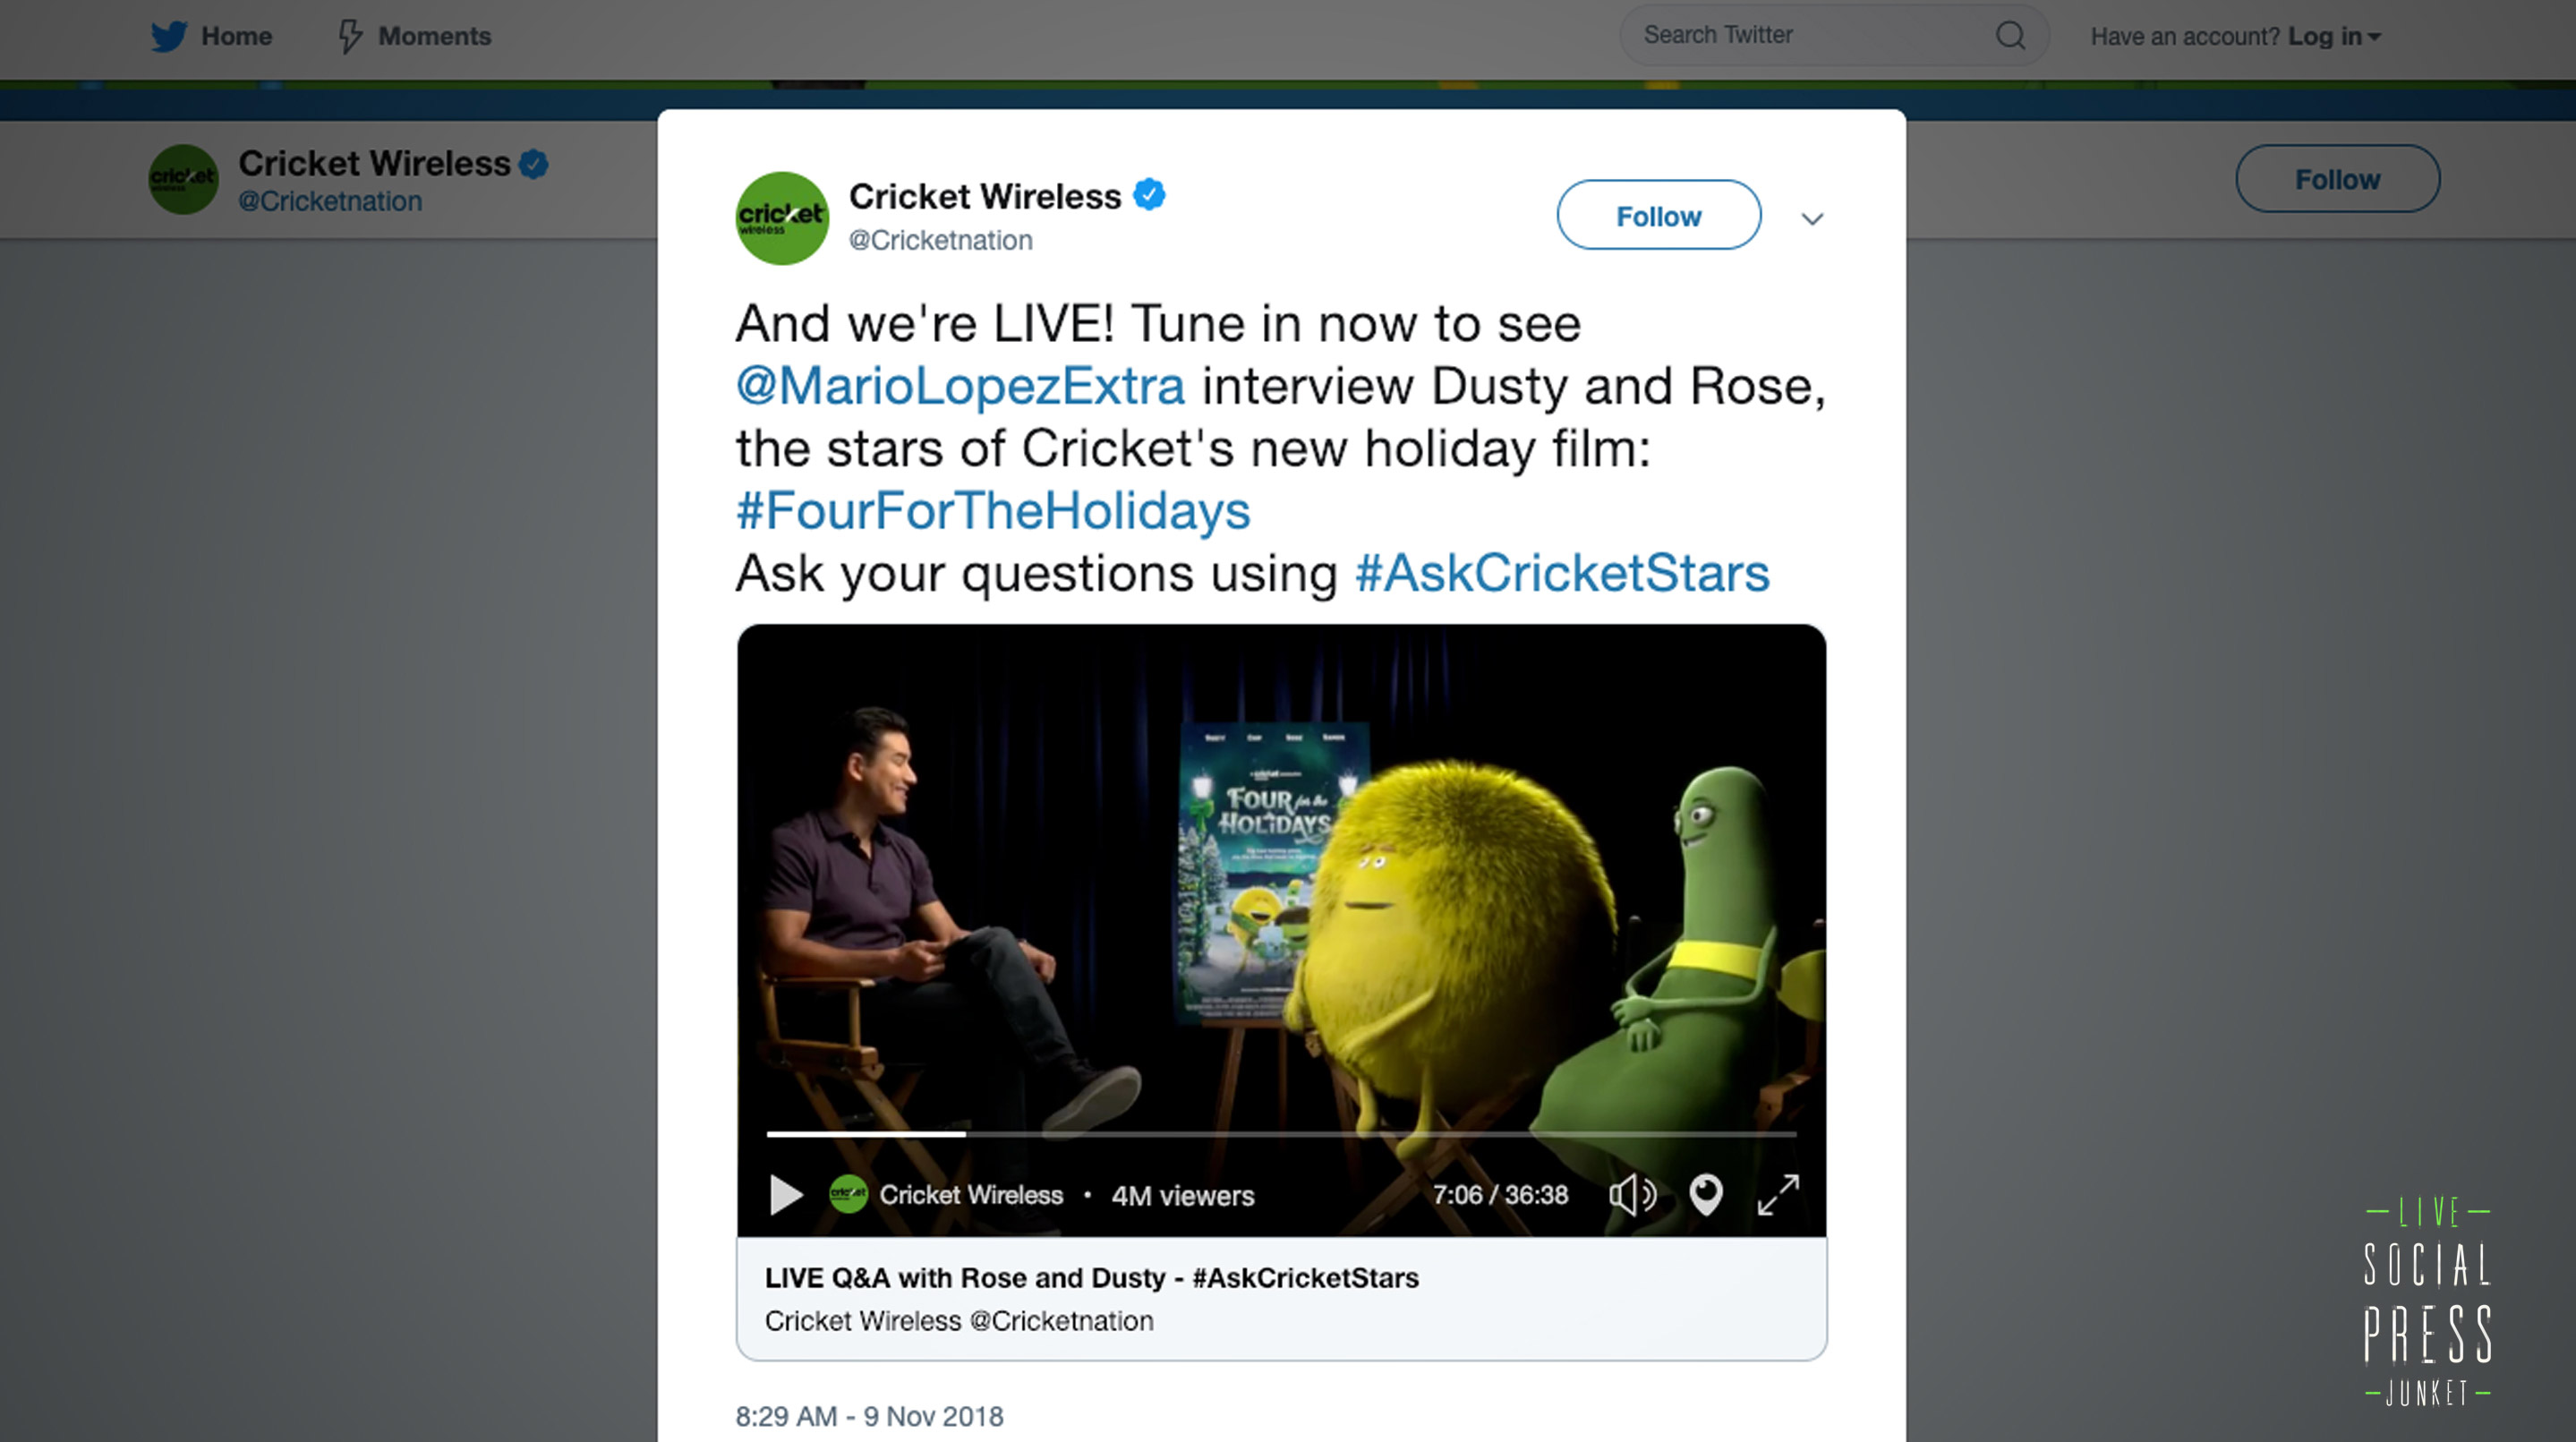 Cricket Wireless Live Social Press Junket The One Club